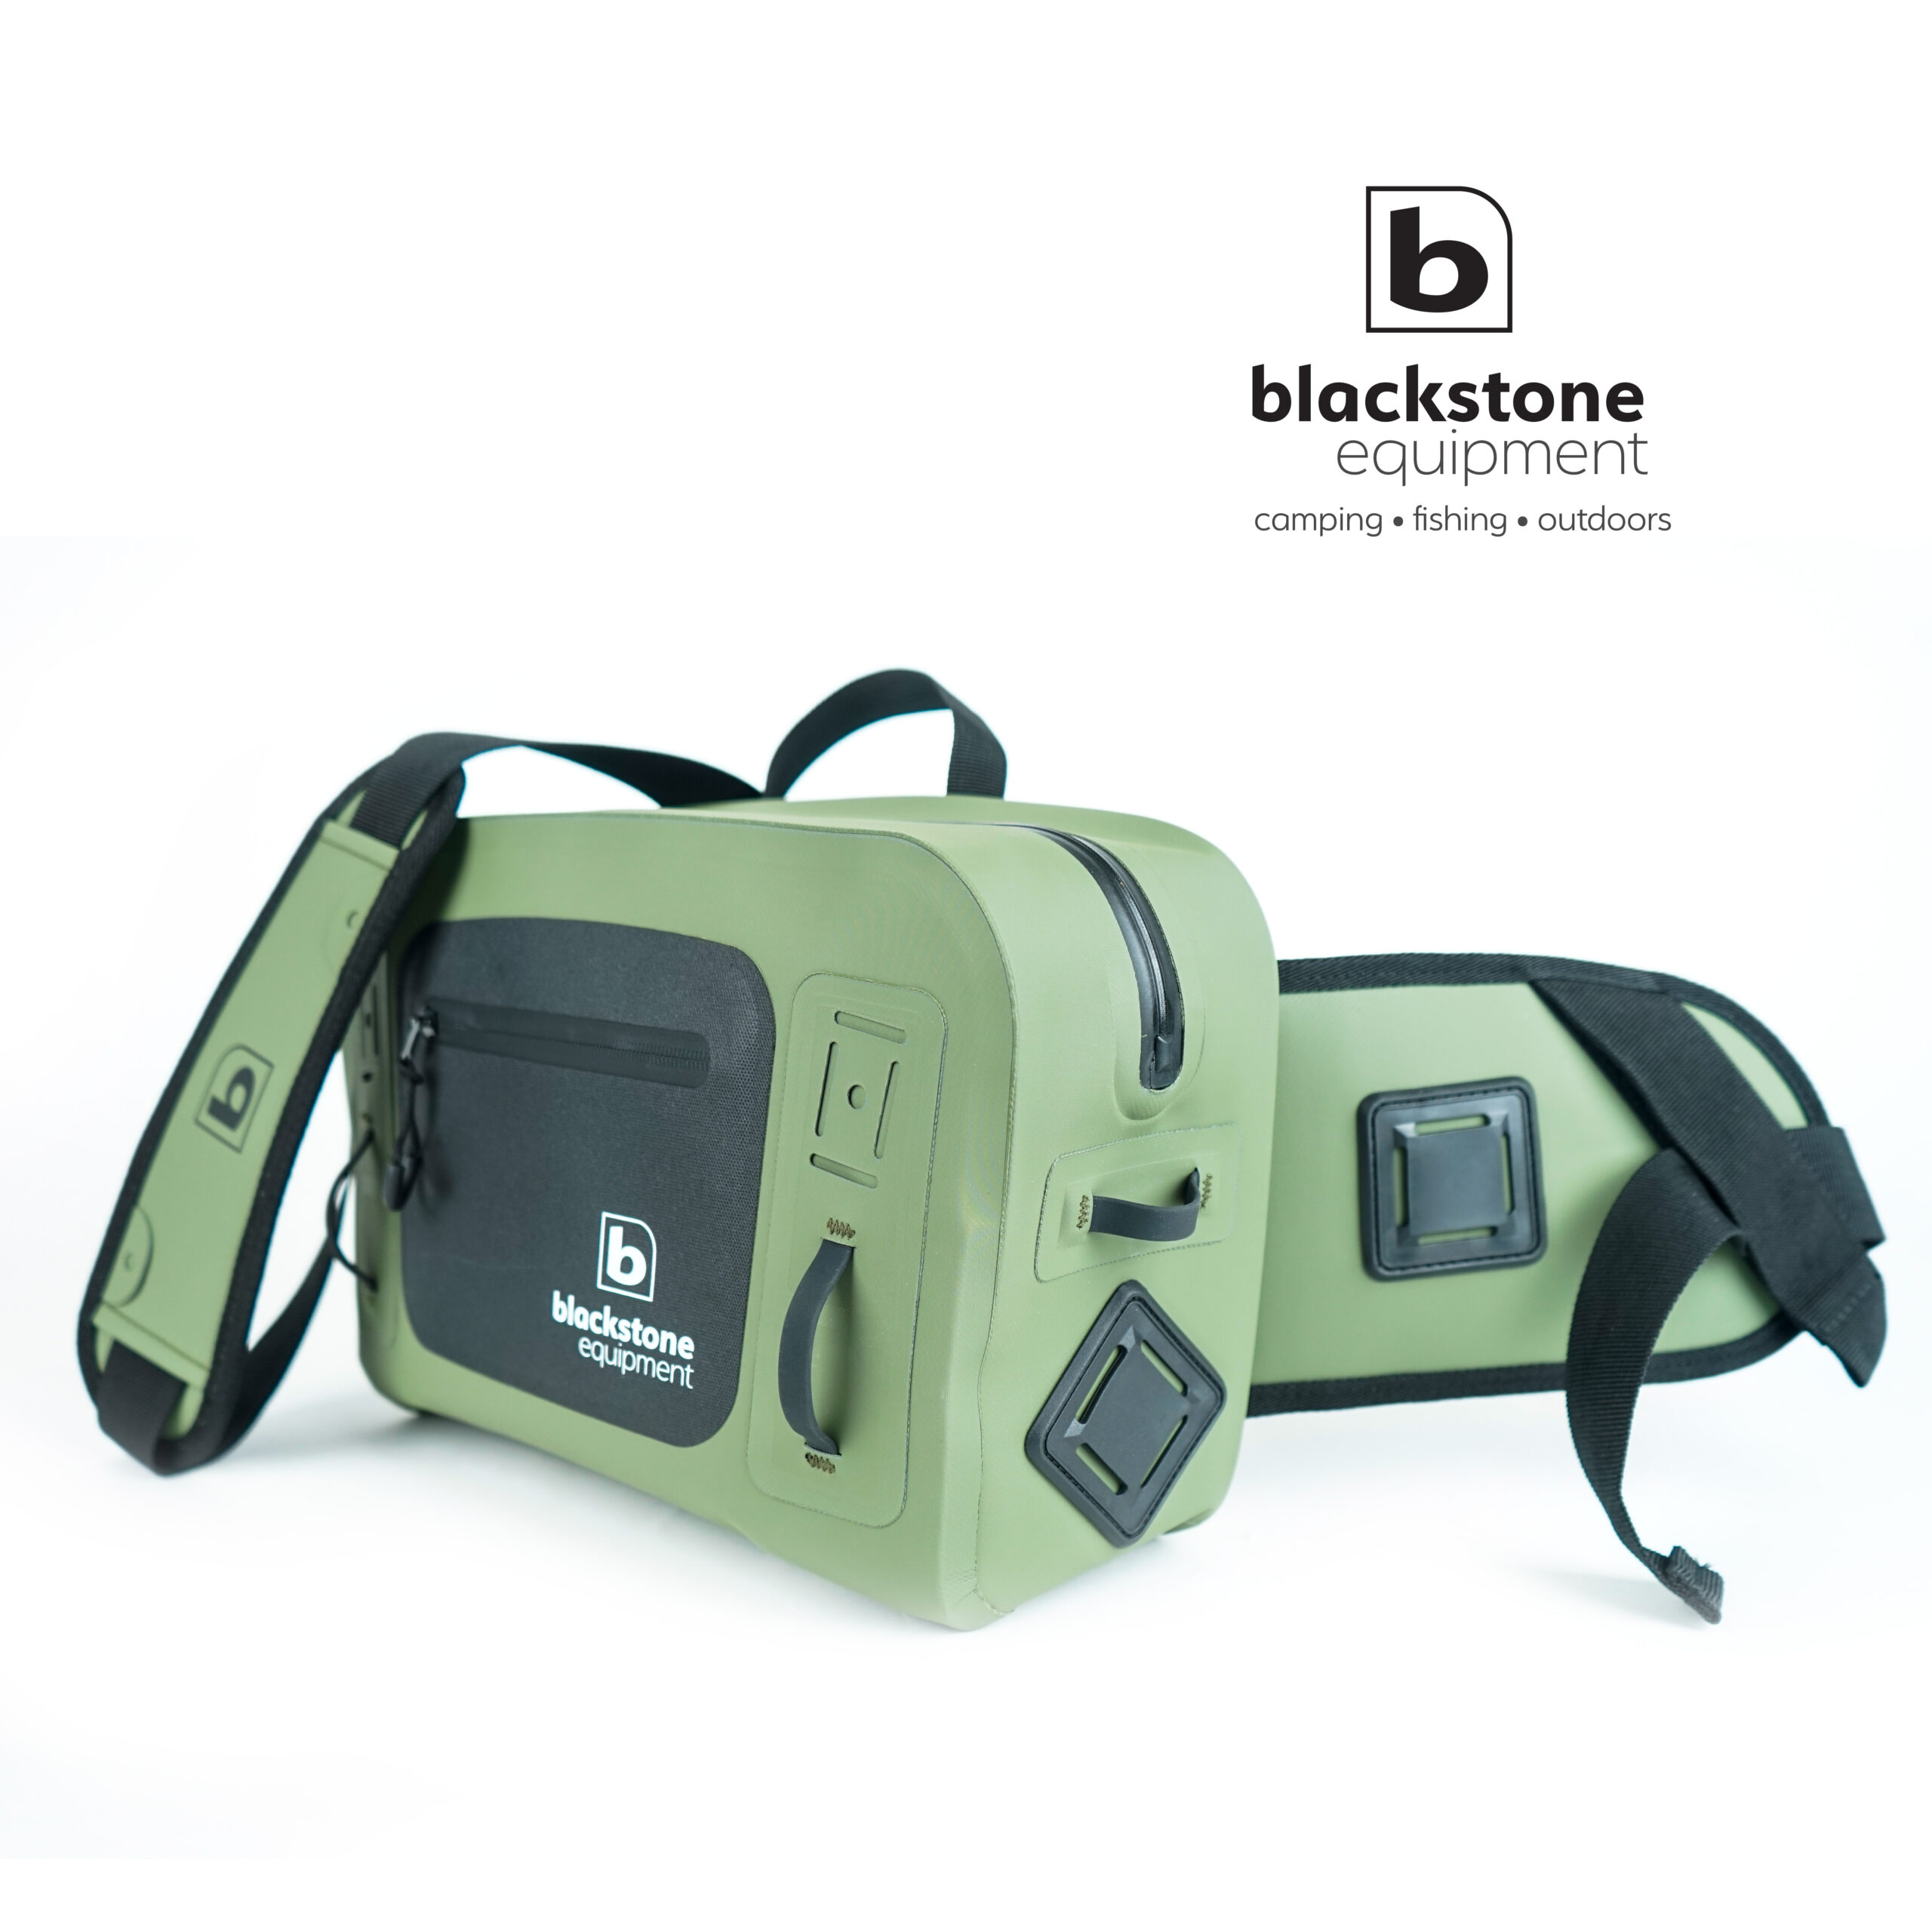 Blackstone Gear - Fishing and Camping Equipment